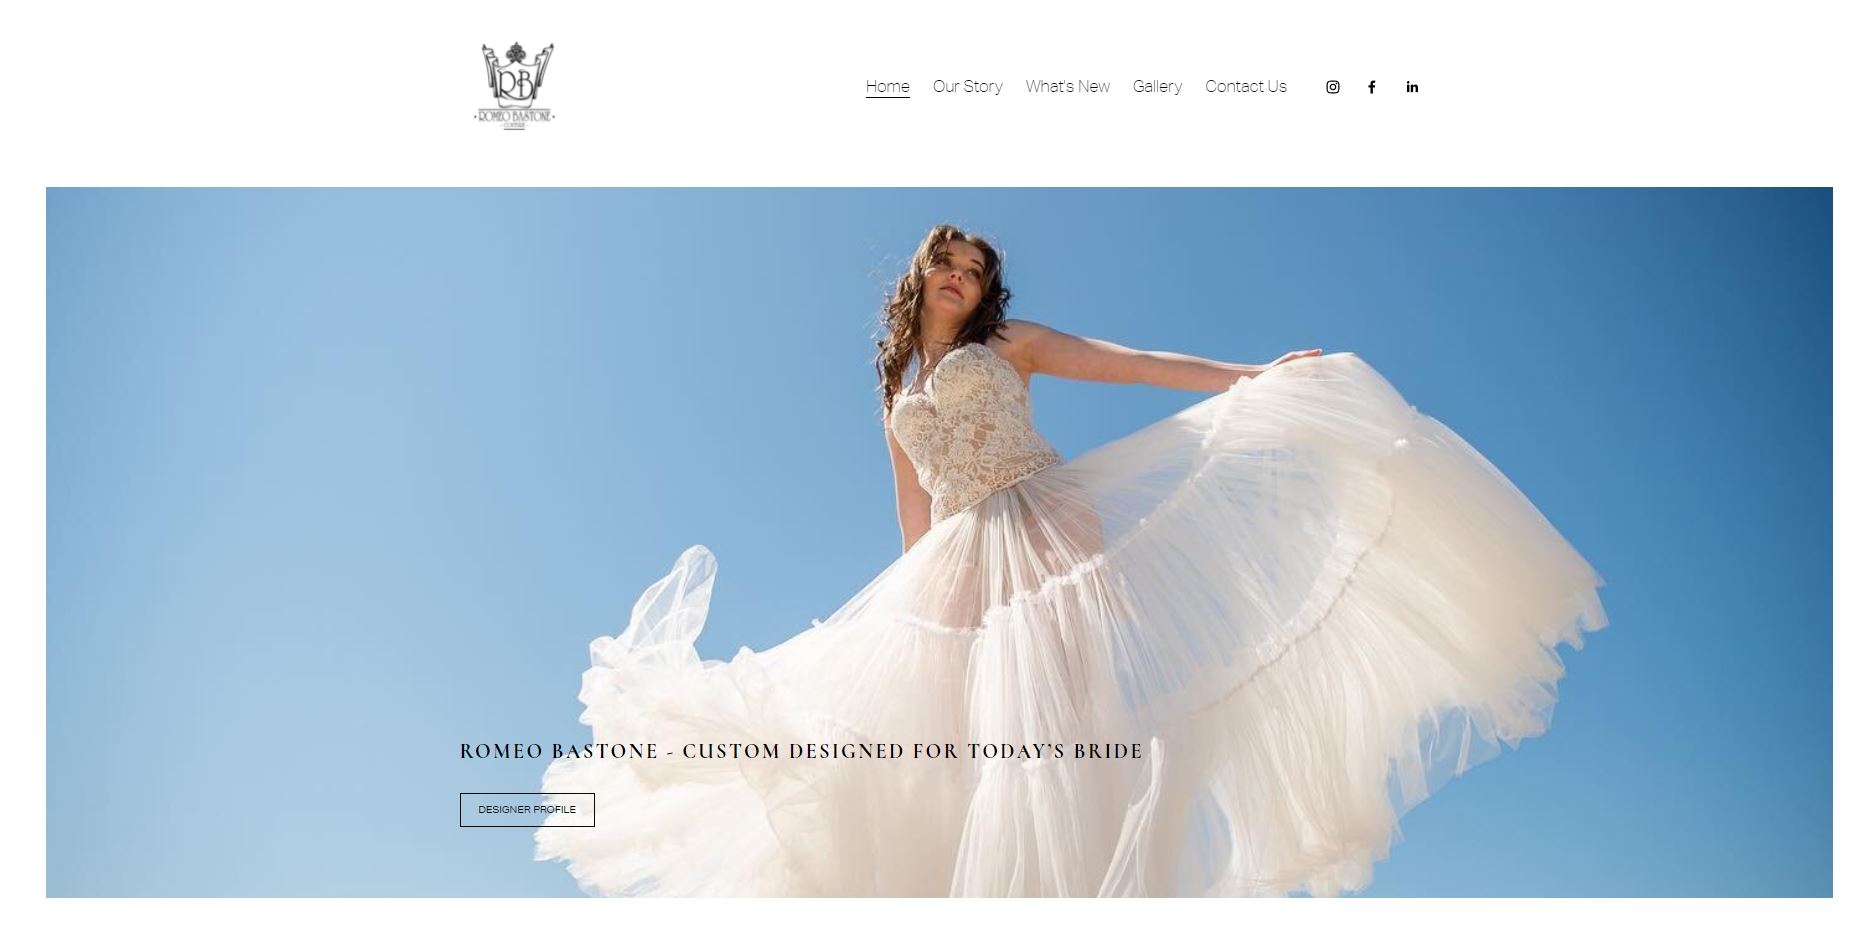 Perfection Bridal Dubai - Bridal Dresses Europe Gowns